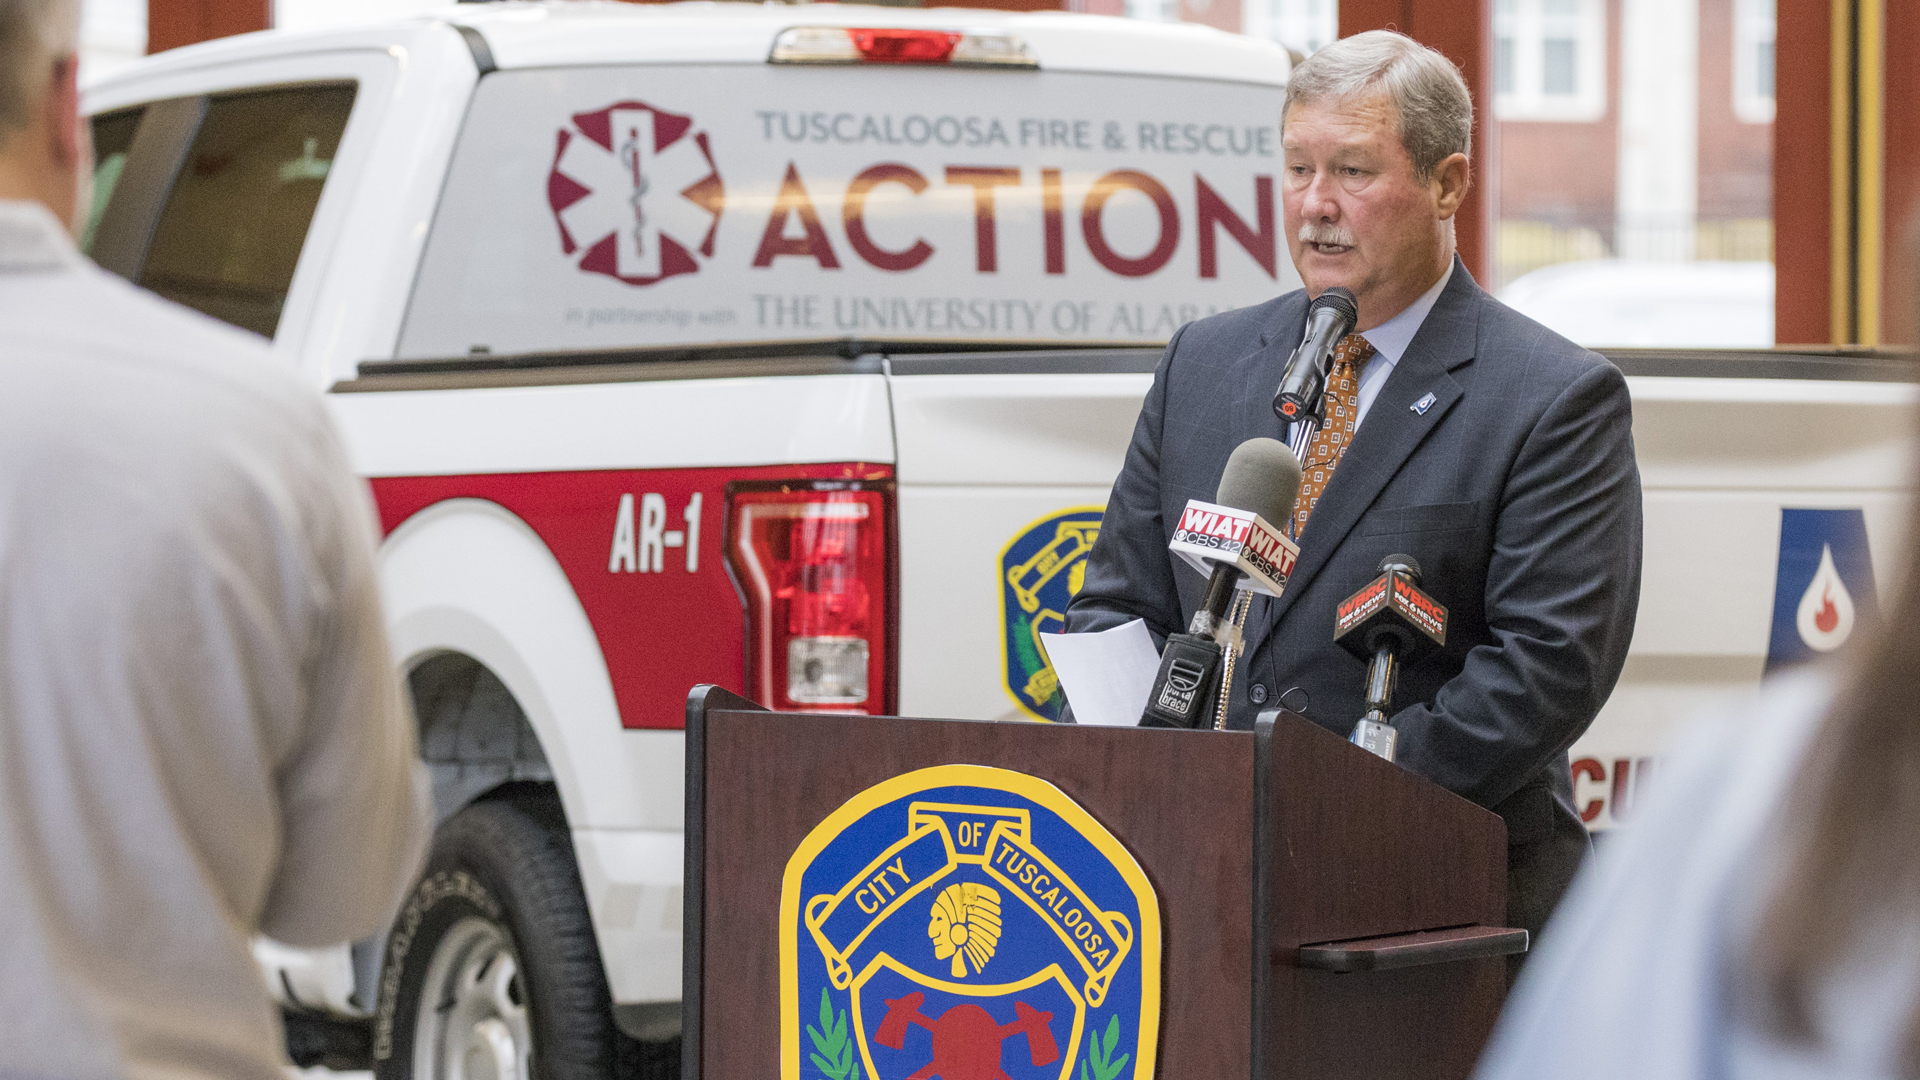 UA, Tuscaloosa Fire, Rescue Partner to Expand Services